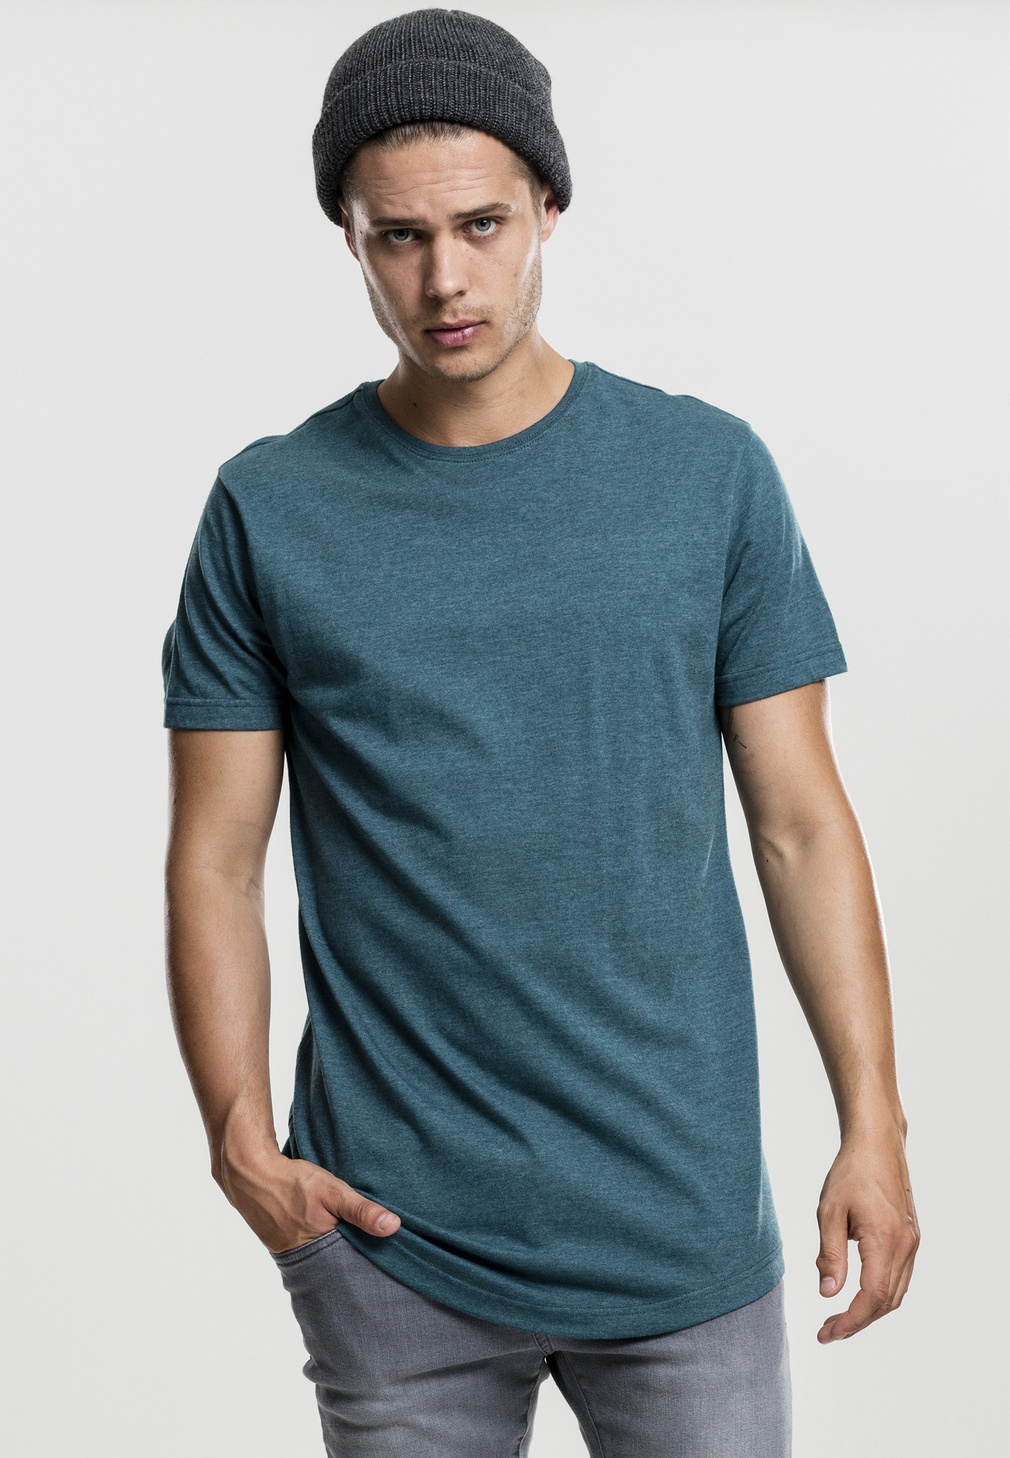 Urban Classics T-Shirt Shaped Melange Charcoal | T-Shirts | Tops Tee Long / | Lifestyle Herren